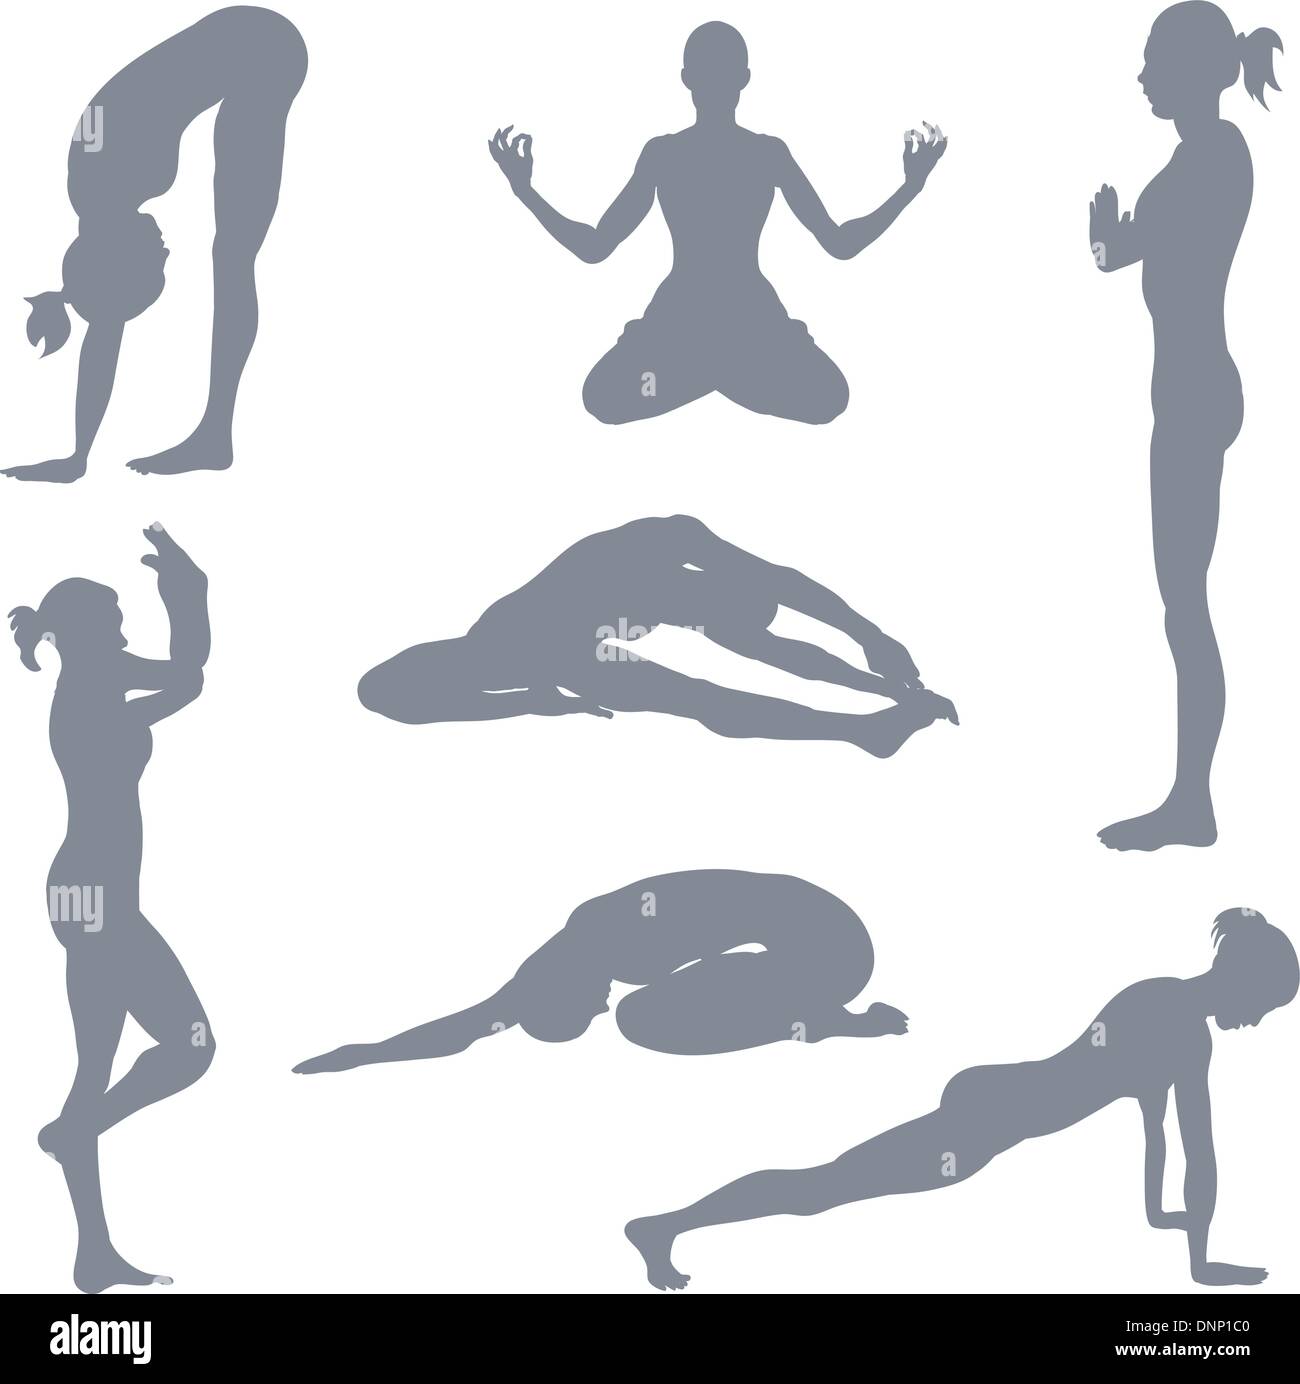 Asanas Yoga Poses poster - TenStickers